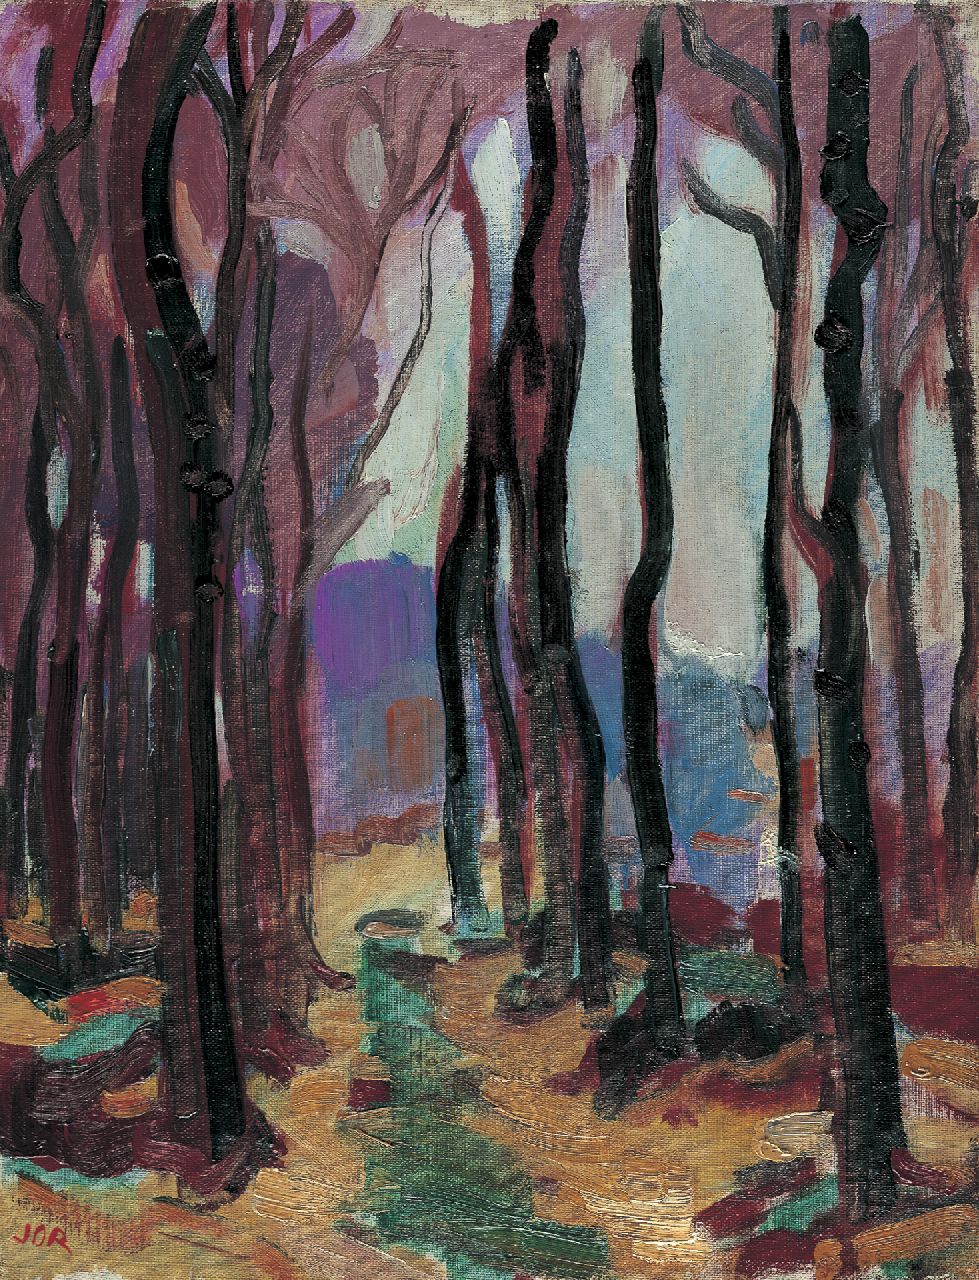 Jordens J.G.  | 'Jan' Gerrit Jordens, A wooded landscape, Öl auf Leinwand 42,2 x 32,5 cm, signed l.l. with monogram und dated 1930 on the reverse